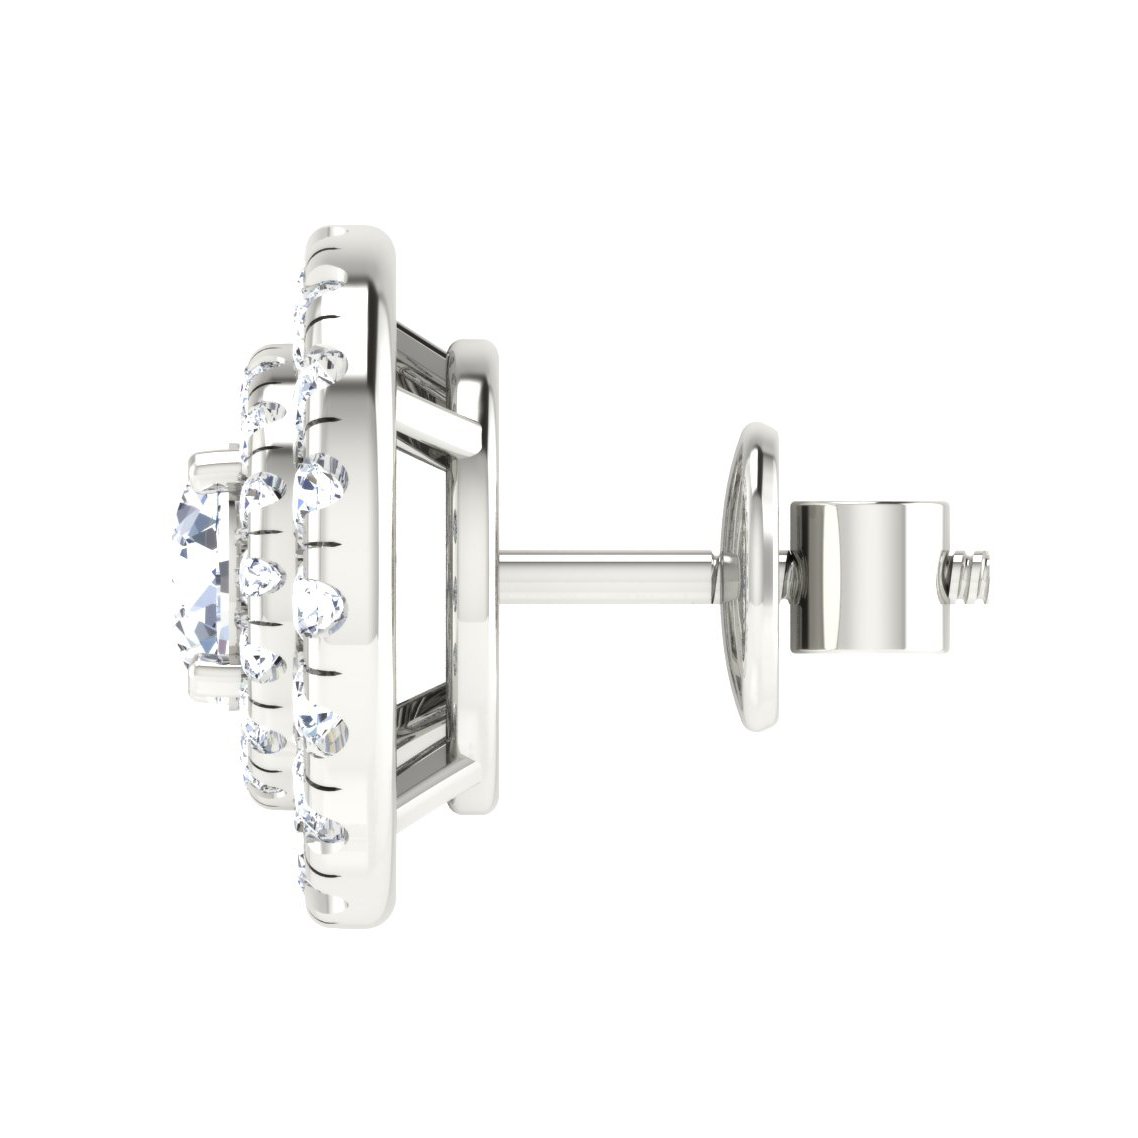 Aurora Of Love Diamond Earring In Pure Gold By Dhanji Jewels